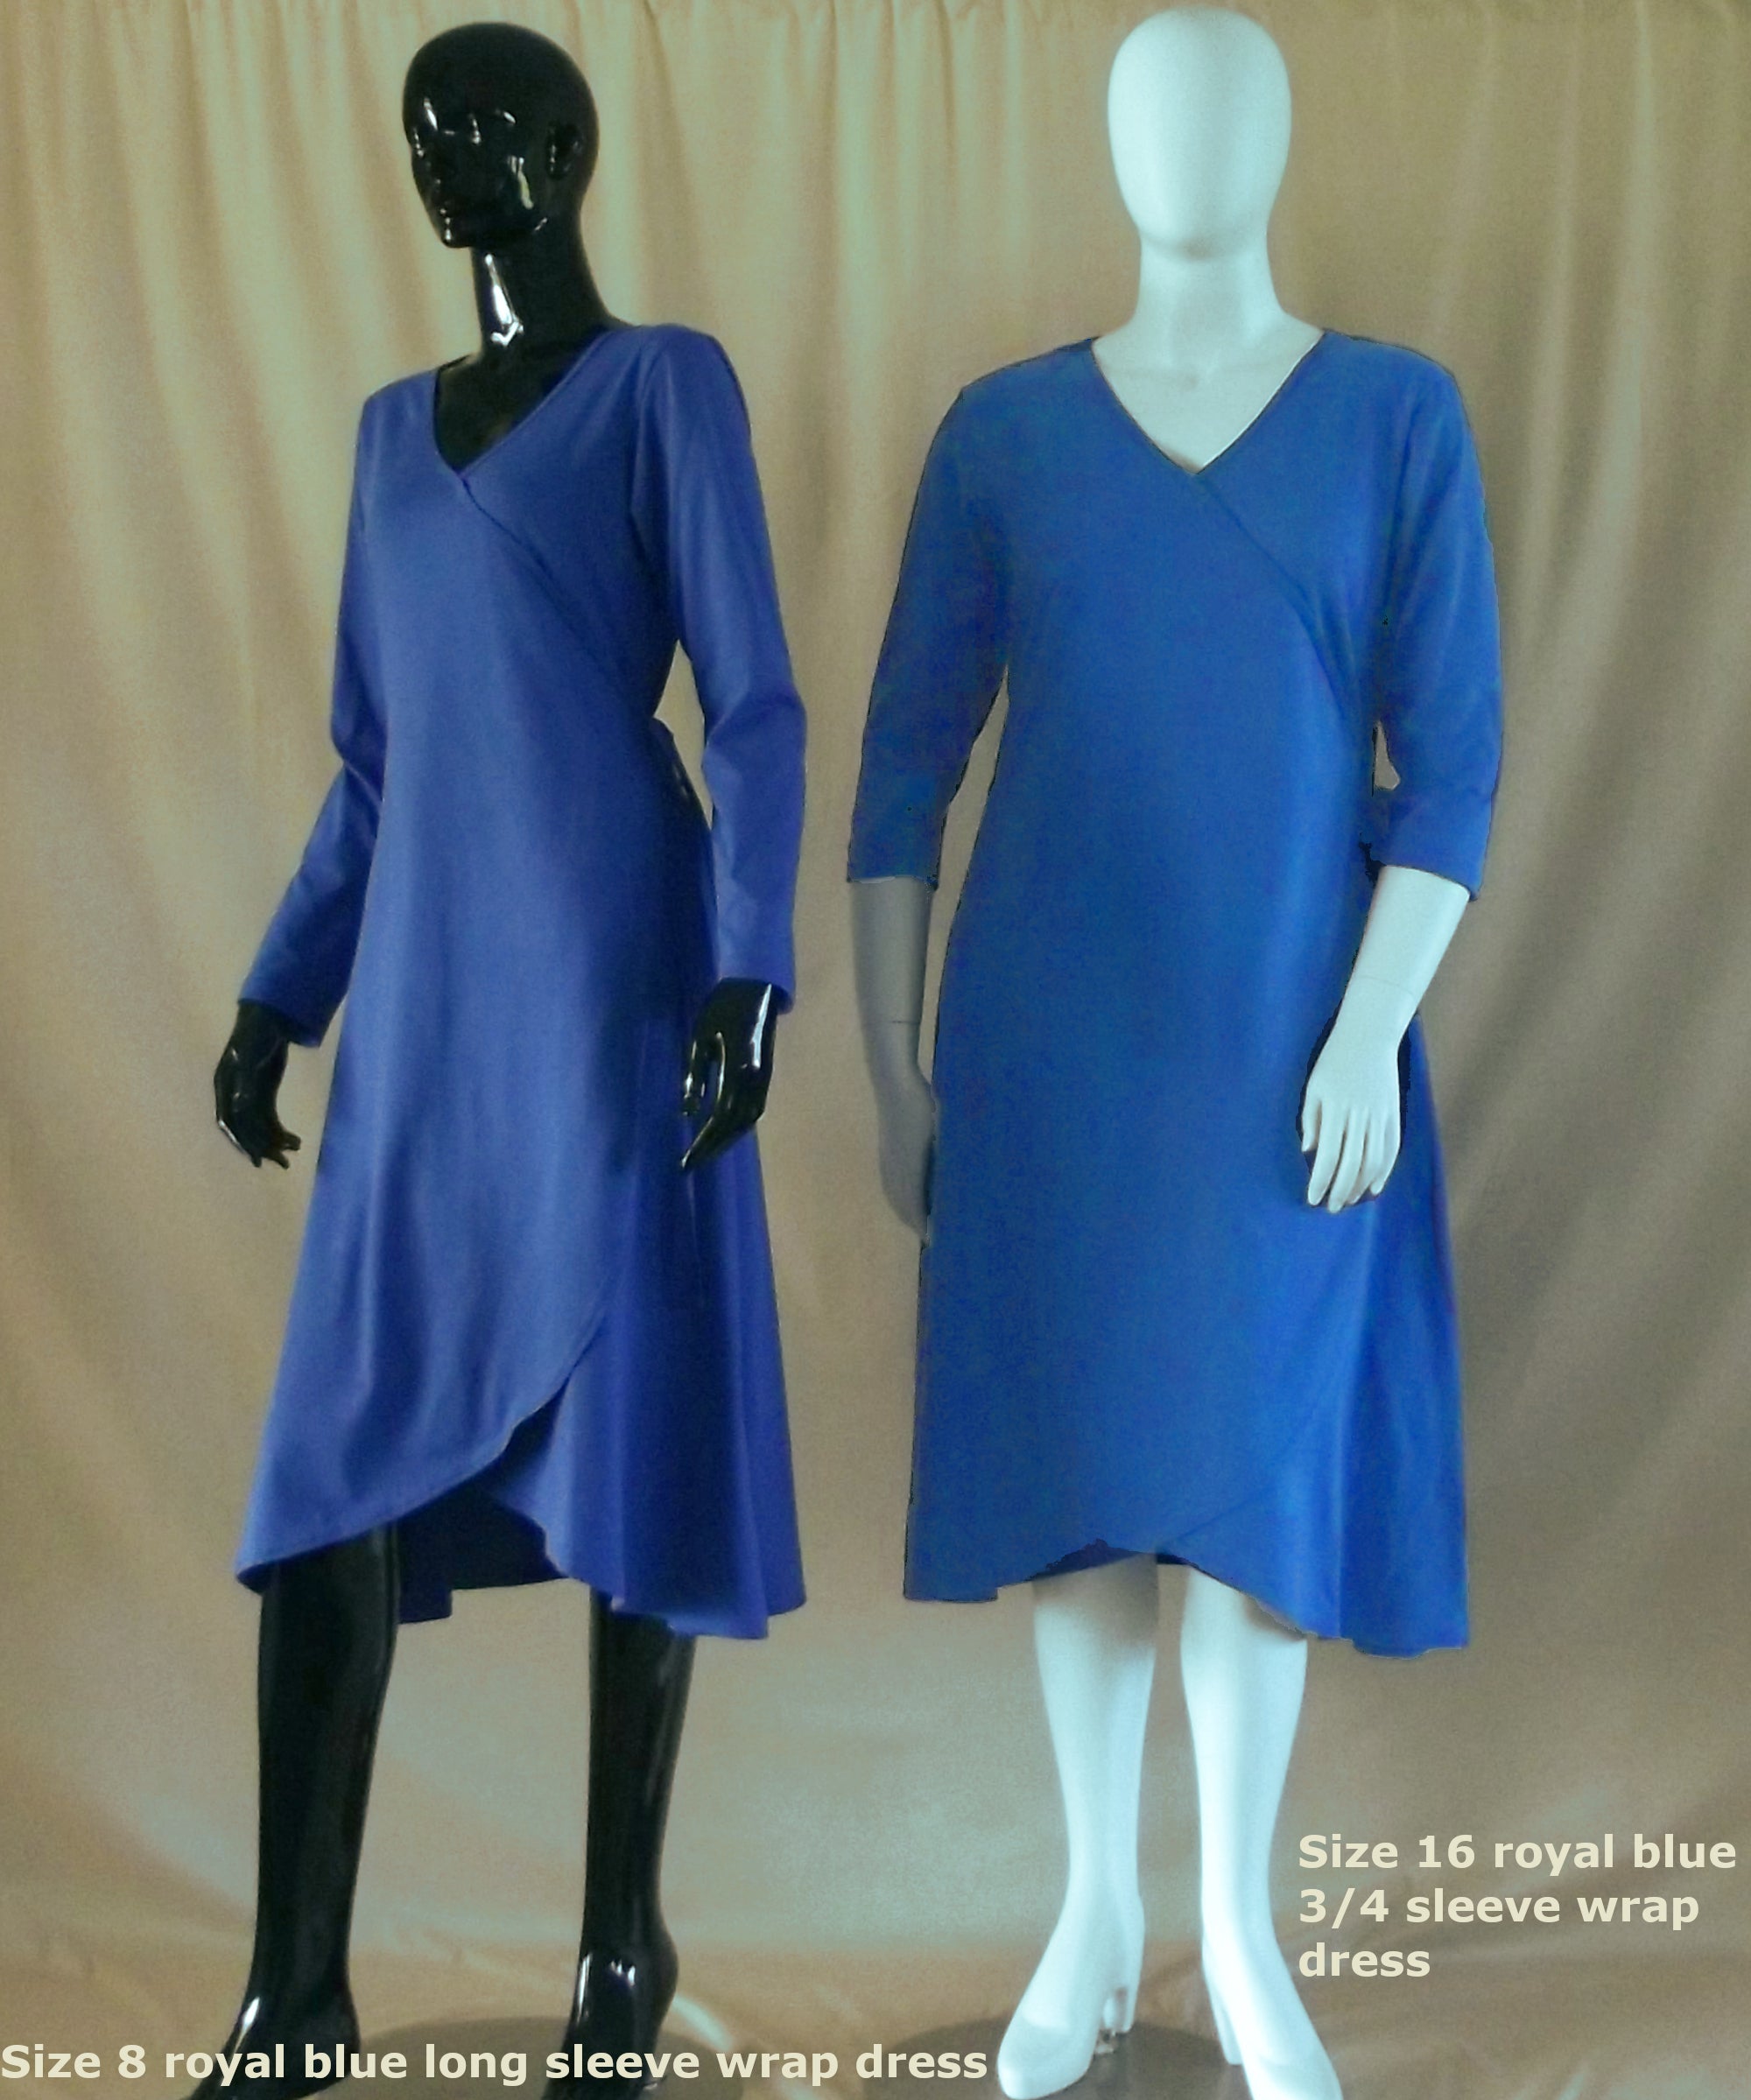 1 royal blue cotton long sleeve wrap dress standing beside 1 royal blue cotton 3/4 sleeve wrap dress